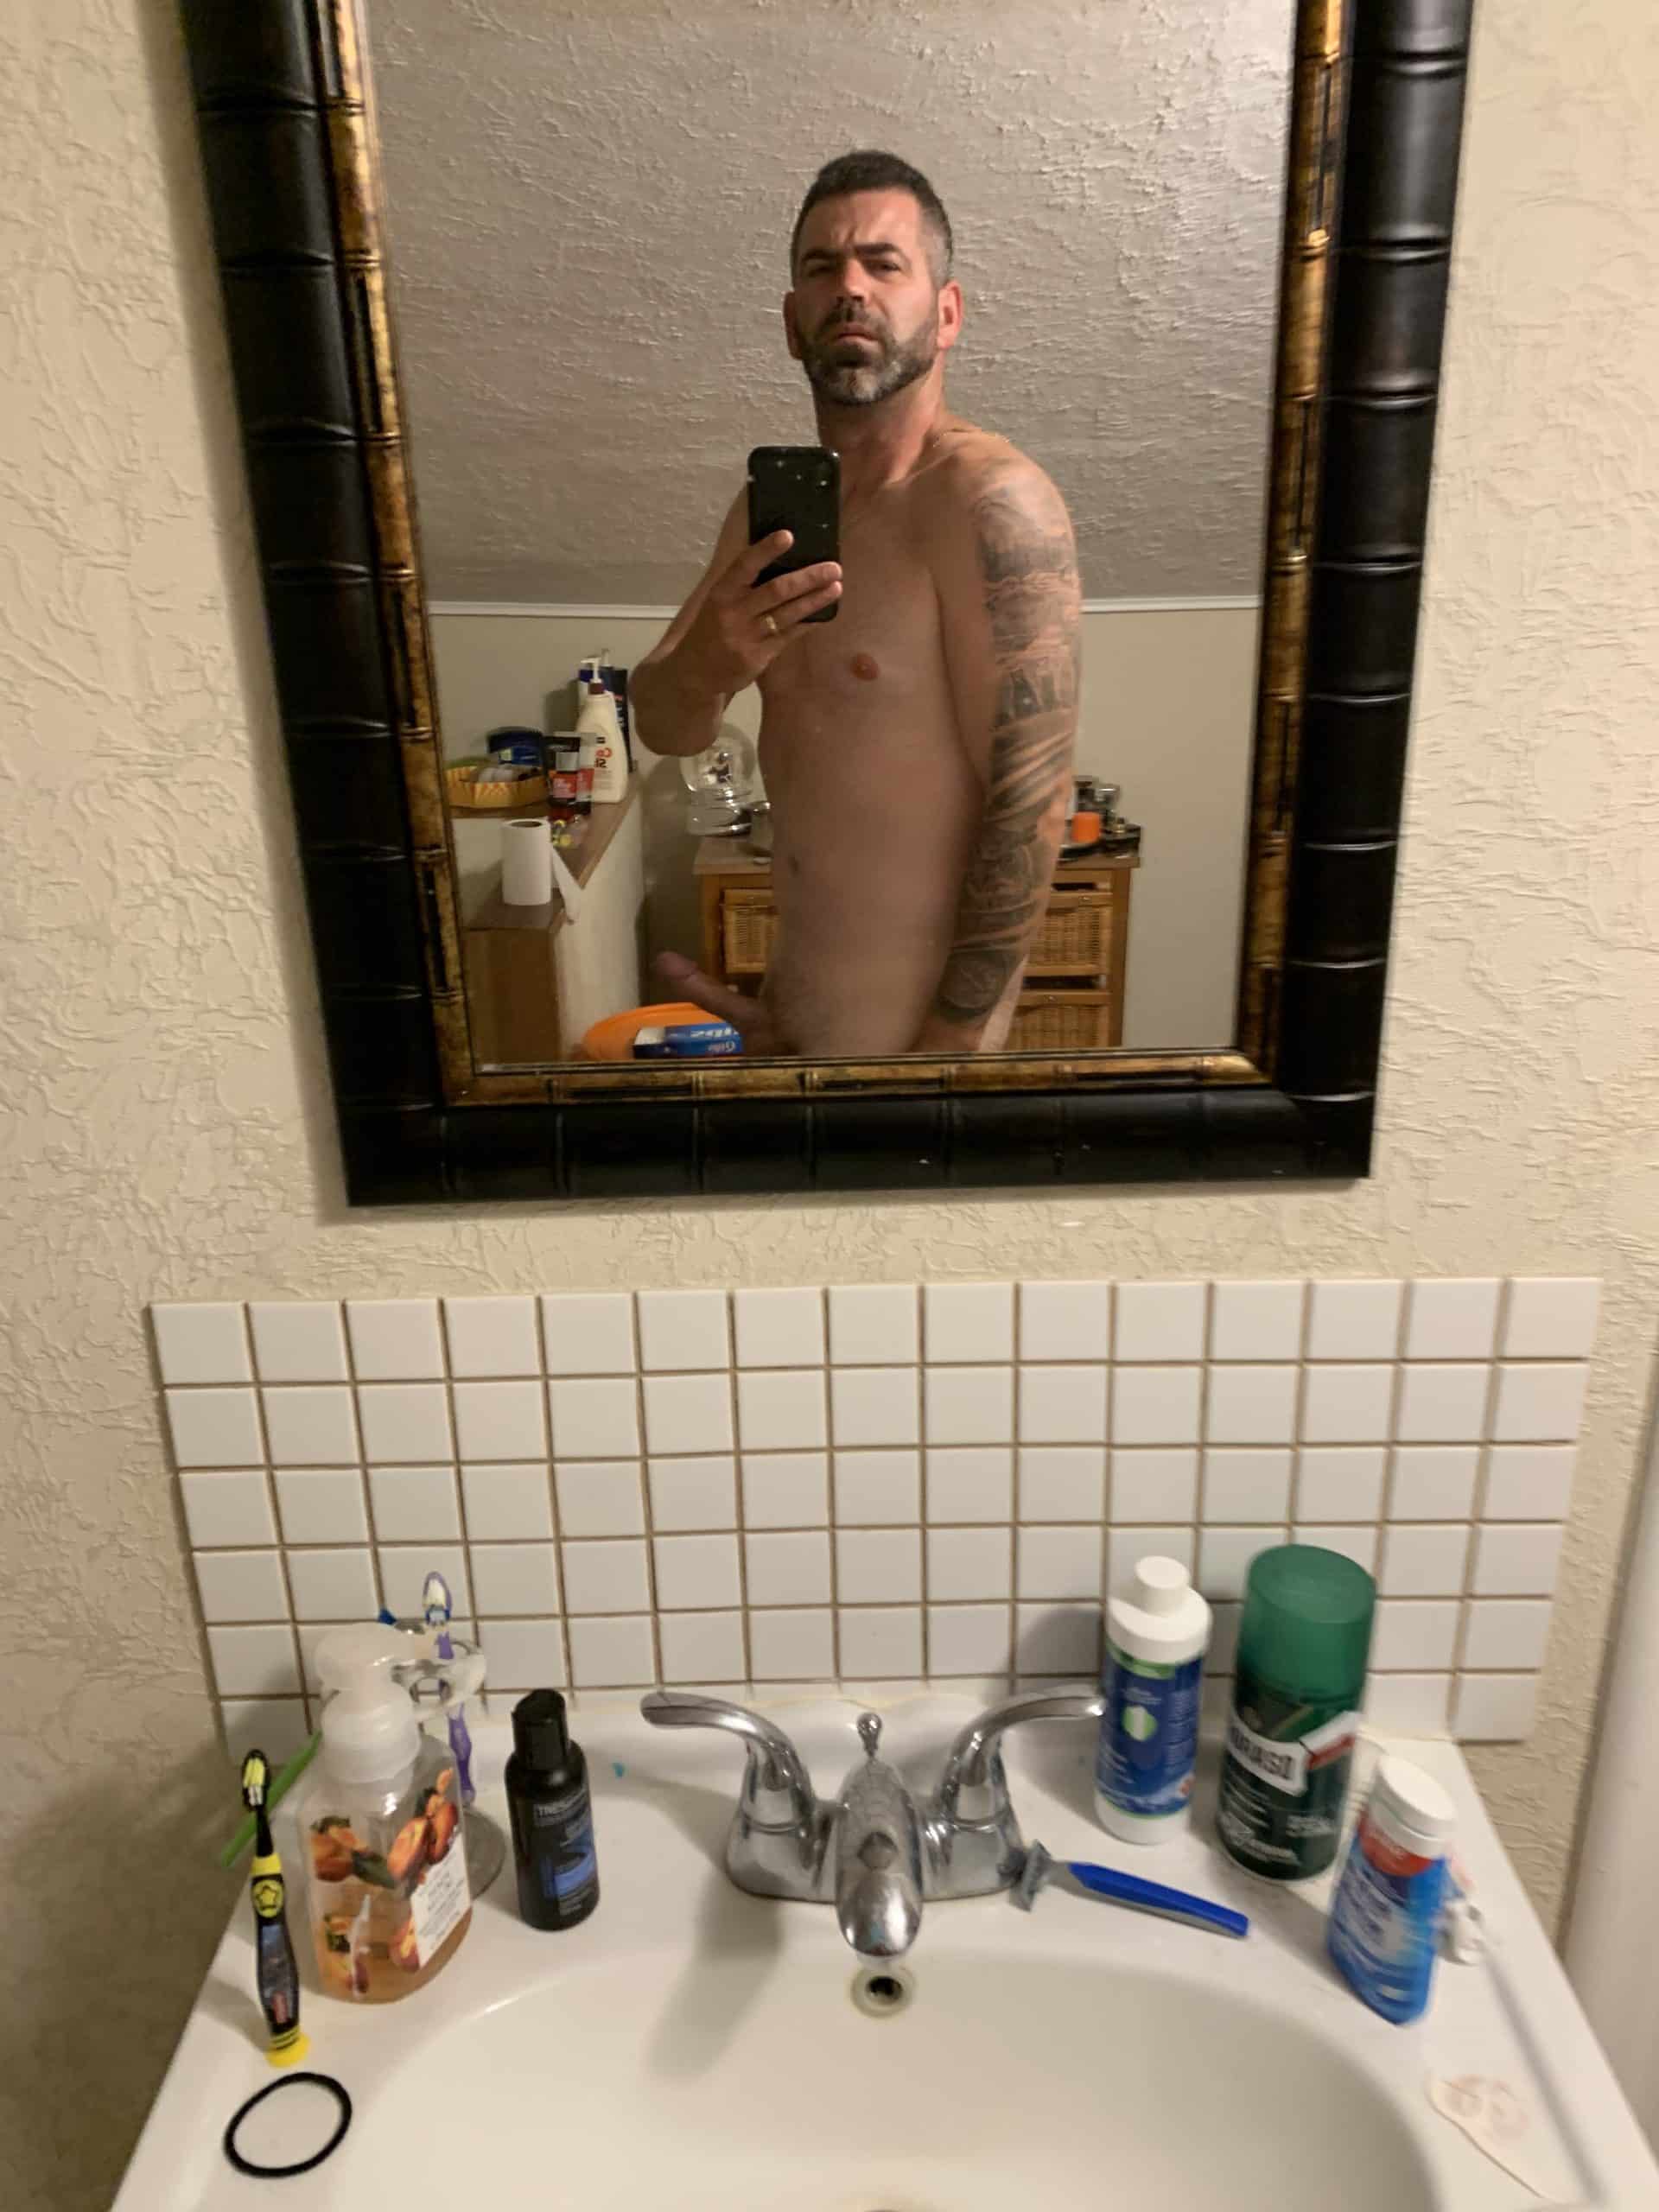 jailbait selfie - Morning wood RobCrook naked selfie showing morning boner! - Dick Flash Pics